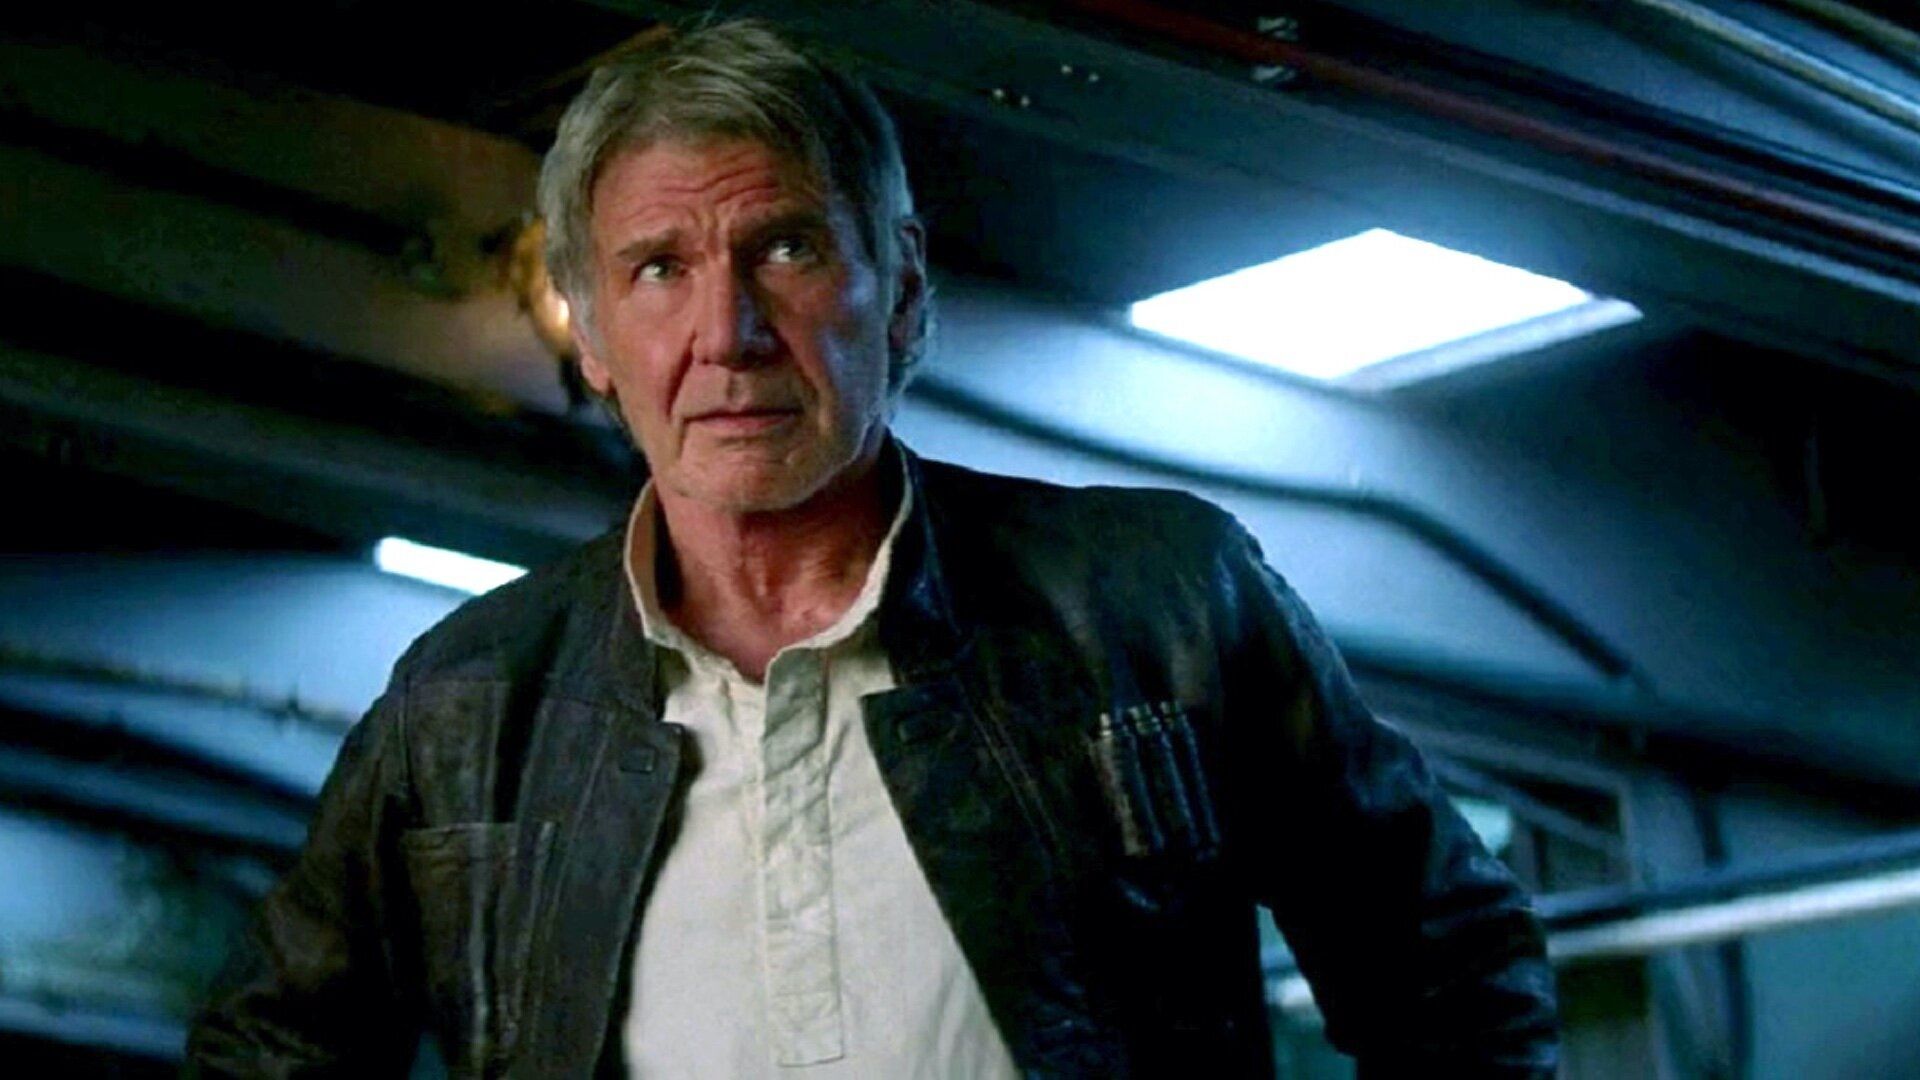 Harrison Ford as Han Solo in Star Wars.